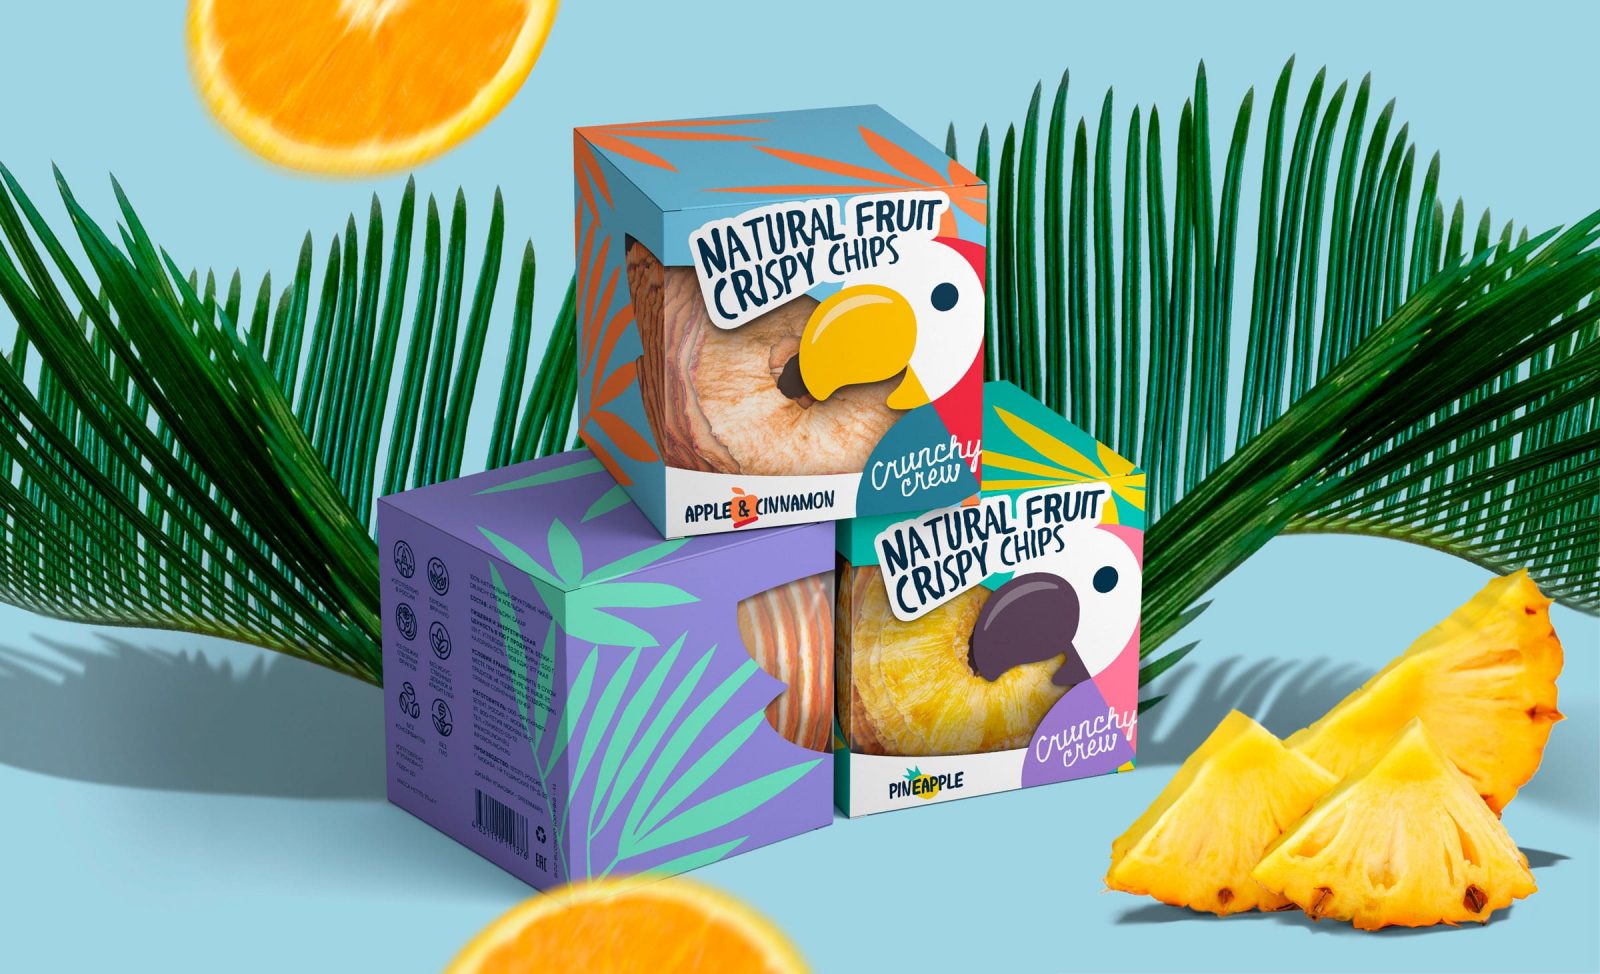 Naming, Logo and Packaging Design for Crunchy Crew Fruit Chips